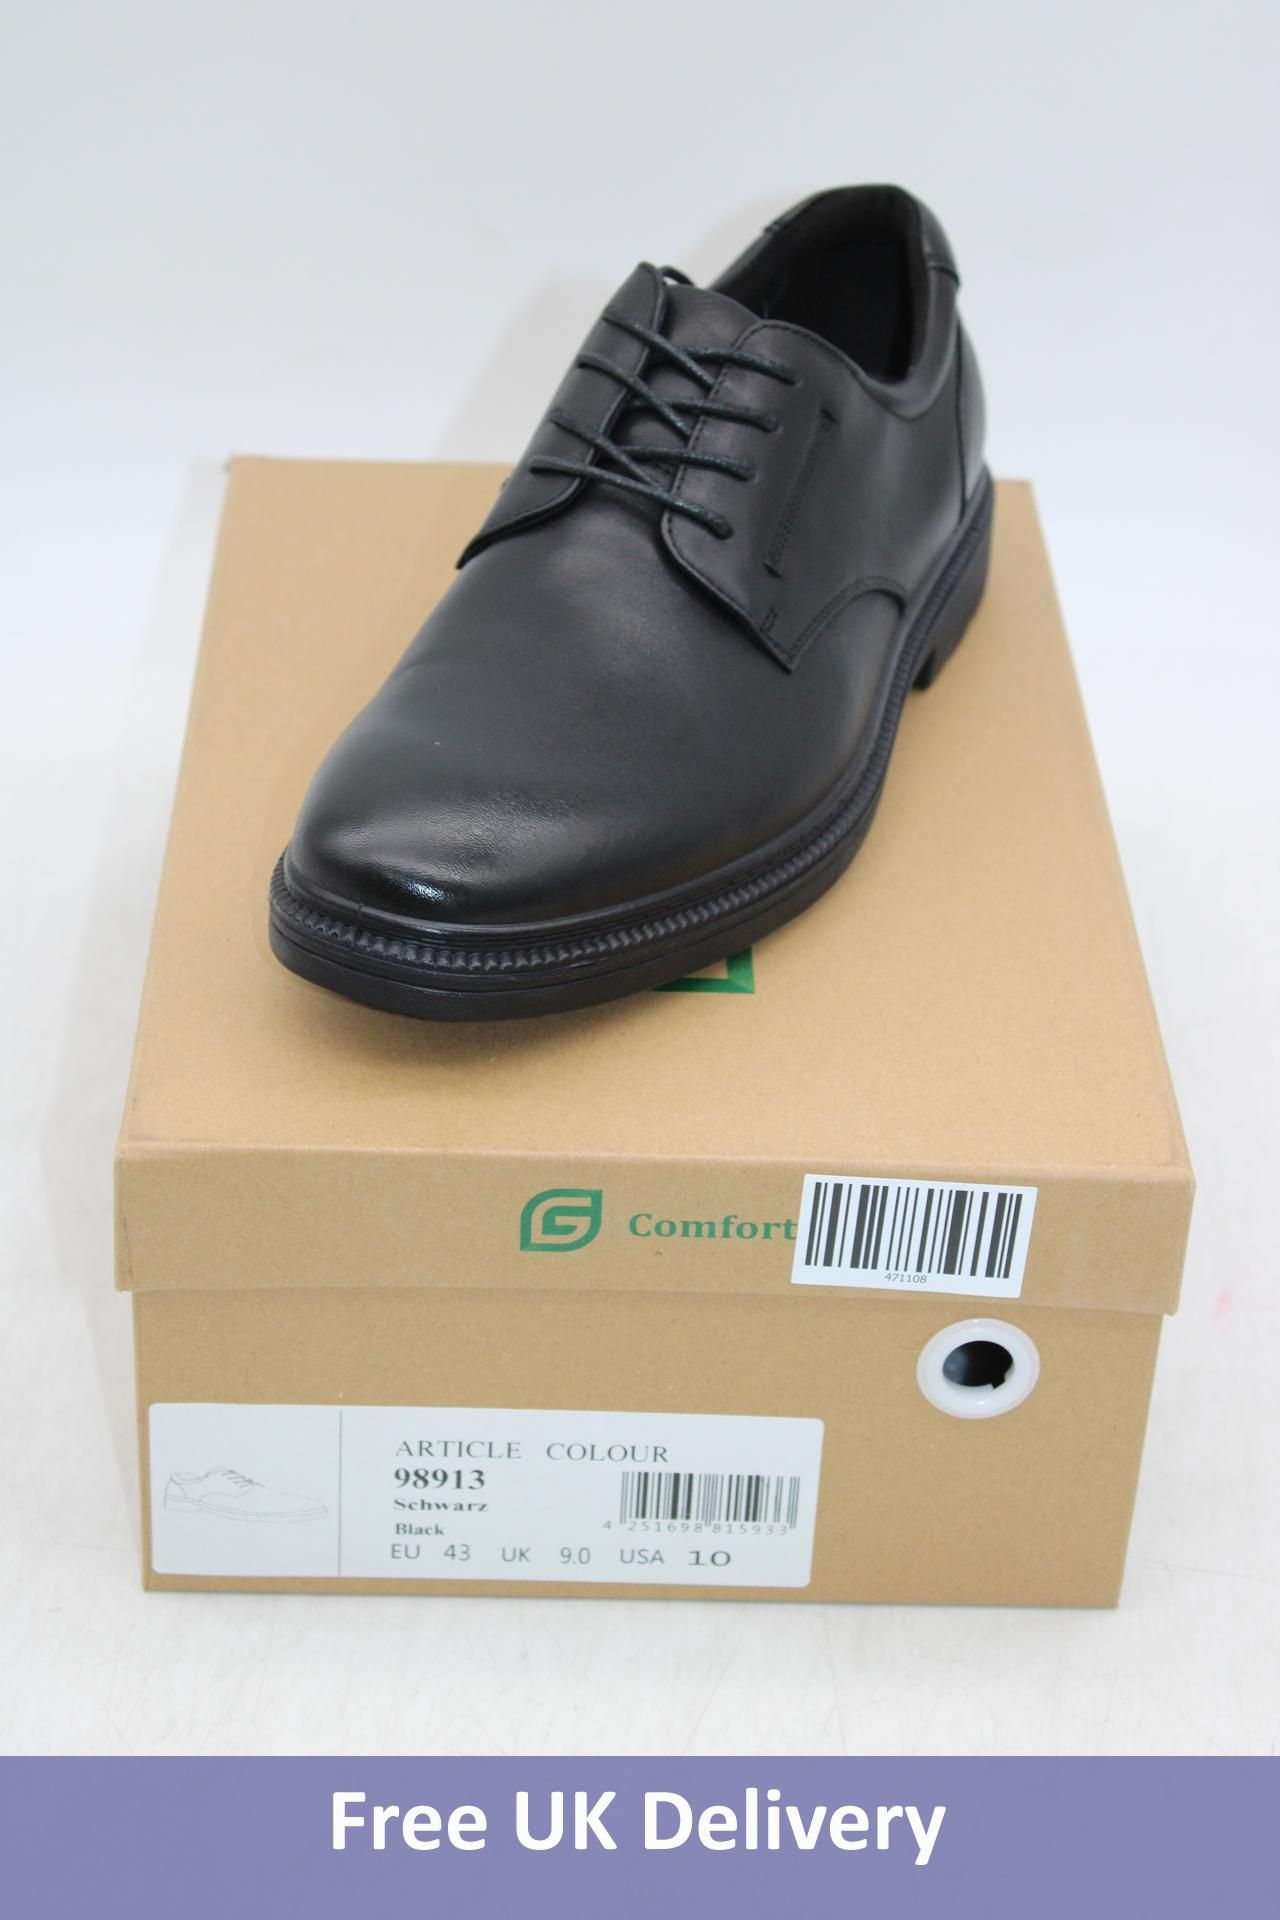 Comfort 98913, Lace Formal Leather Shoes, Black, UK 8